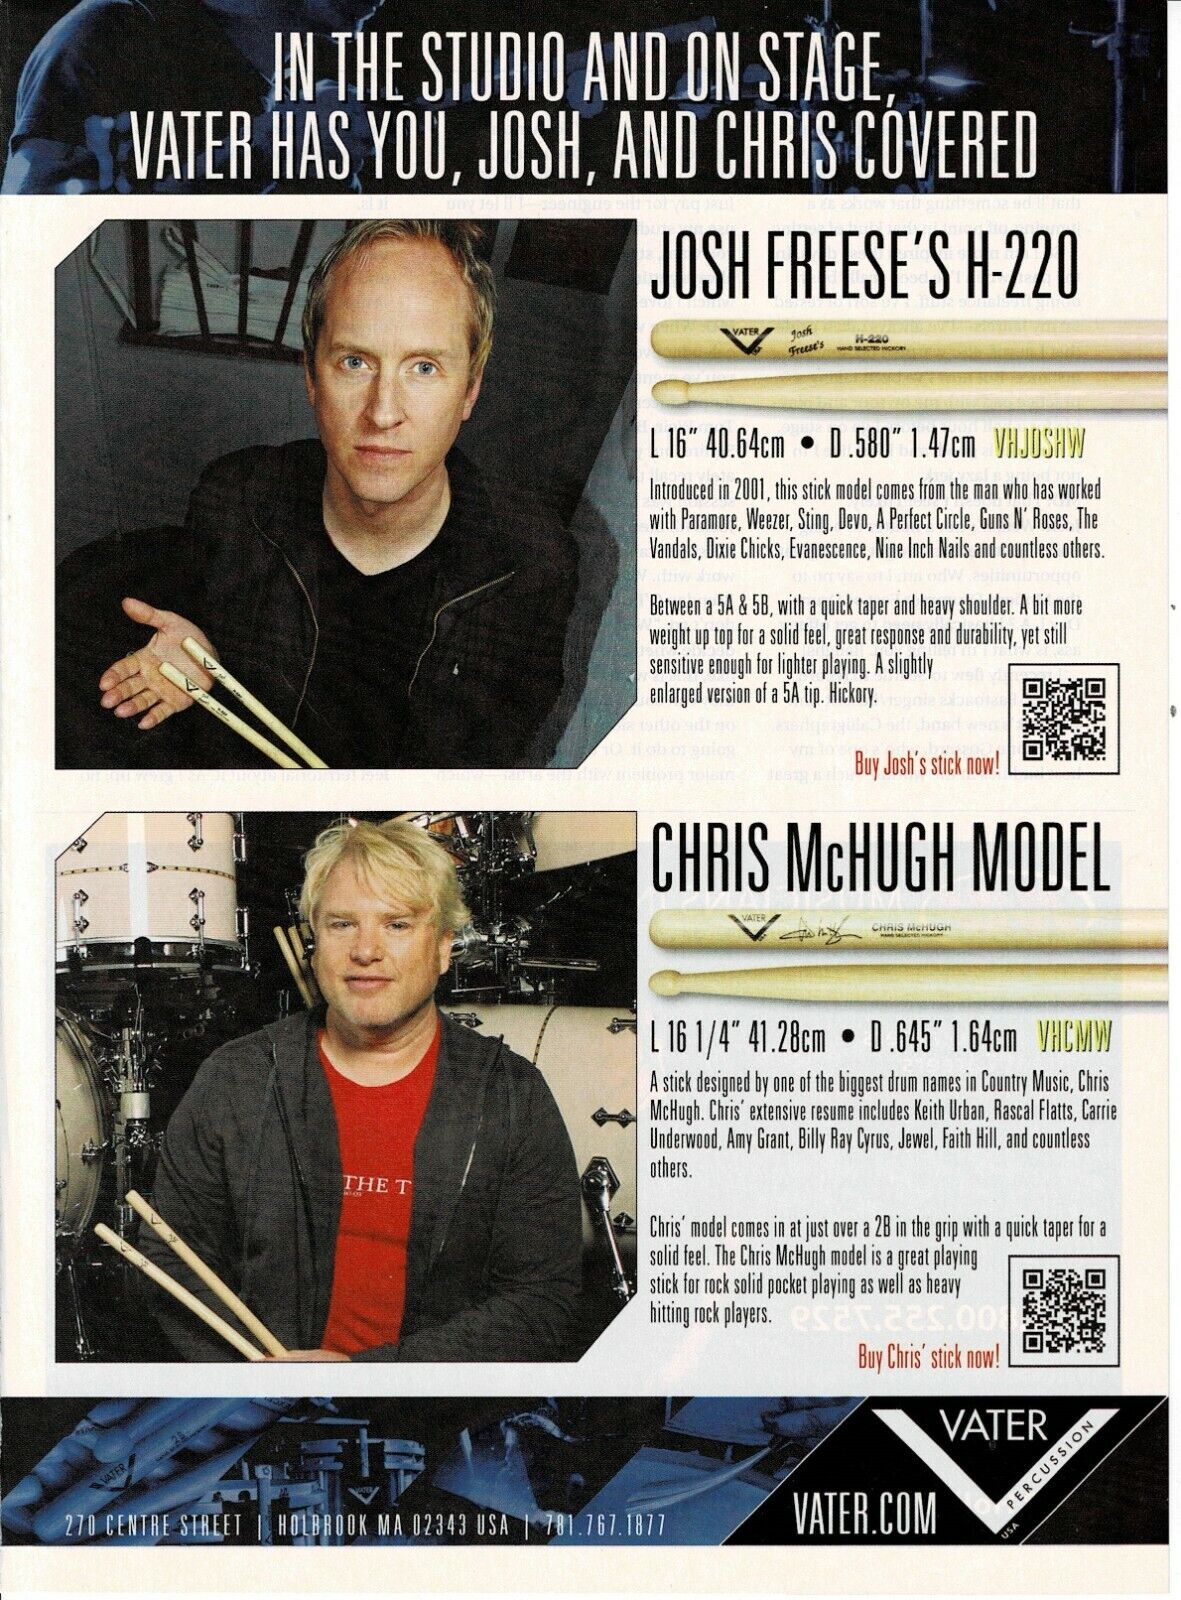 Vater Percussion - Josh Freese / Chris McHugh - 2011 Print Advertisement